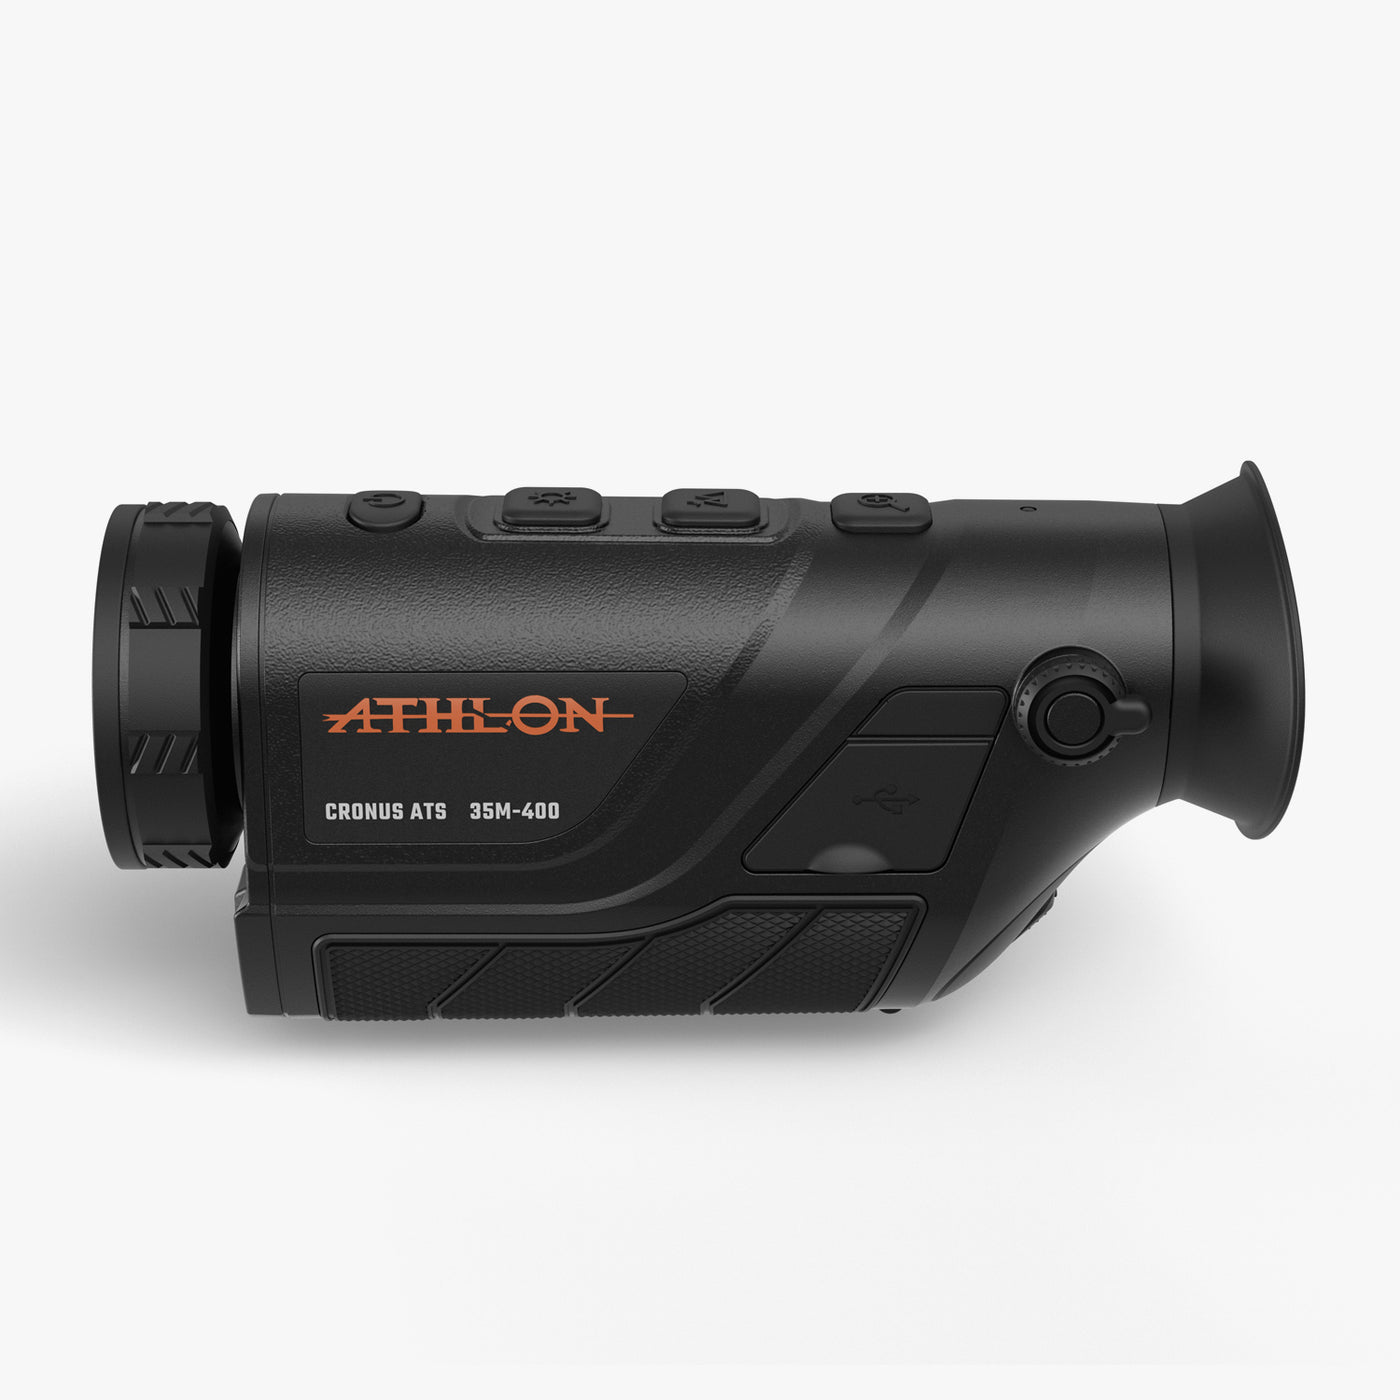 Athlon CRONUS ATS 35M-400 THERMAL MONOCULAR